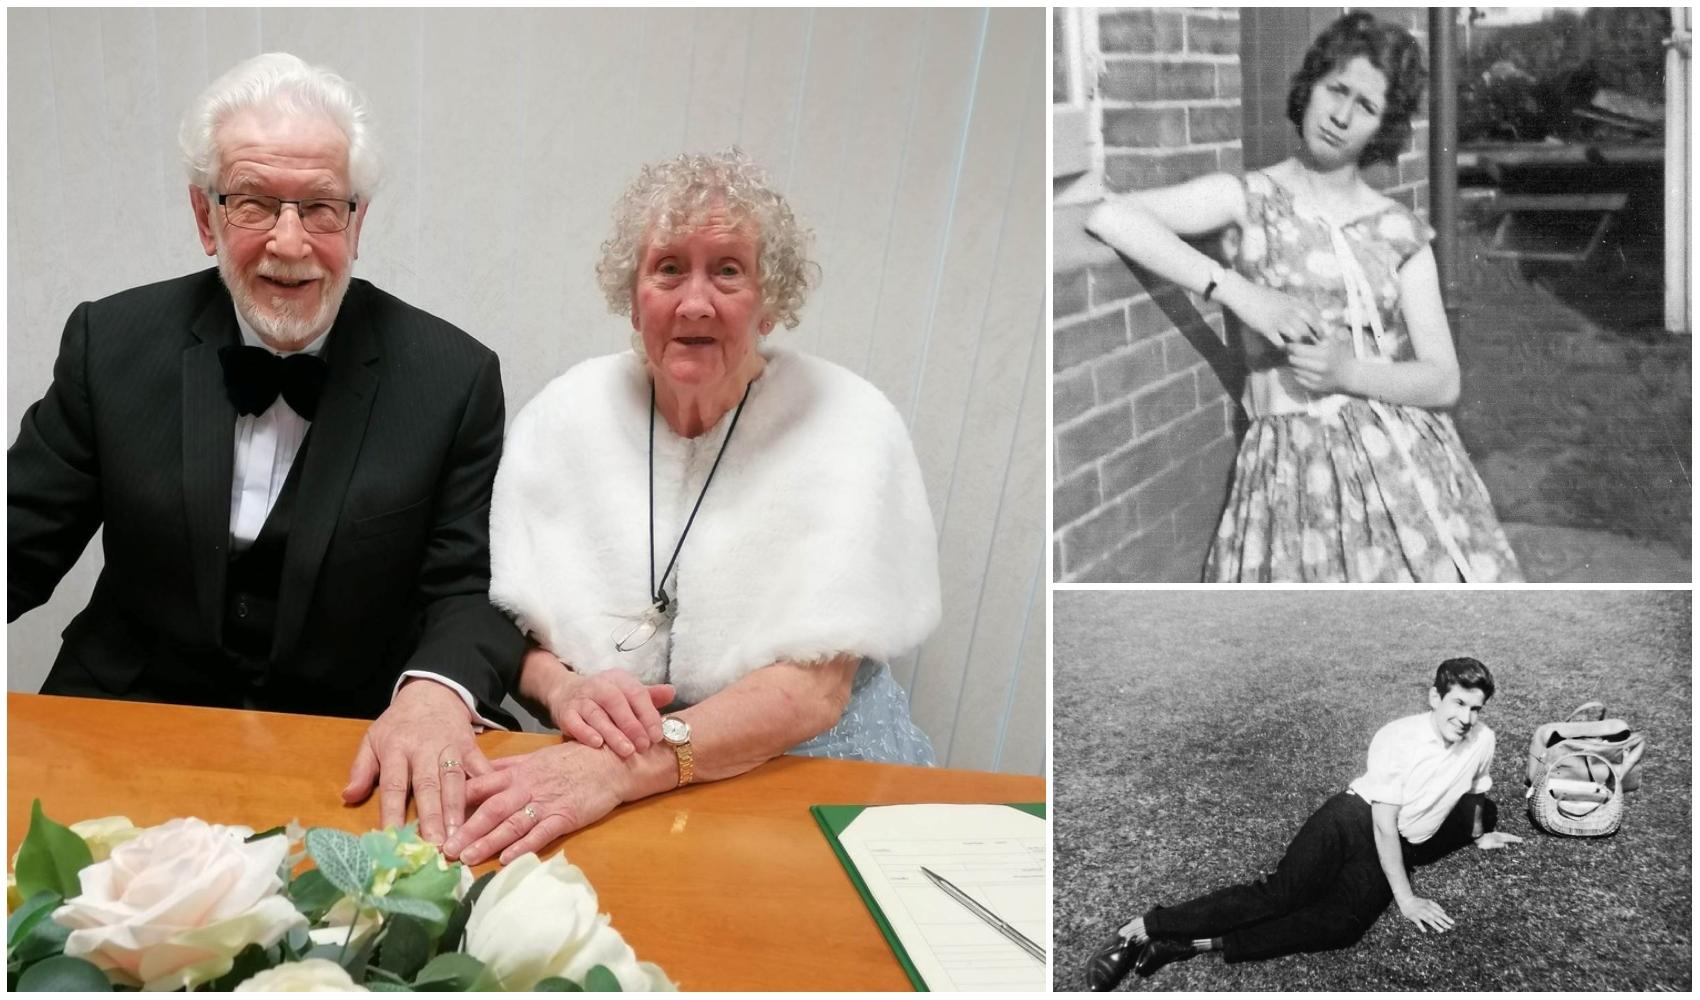 colaj foto cu Len Allbrighton si Jeanette Steer la nunta la varsta de 86 de ani si poze cu ei in tinerete, alb negru